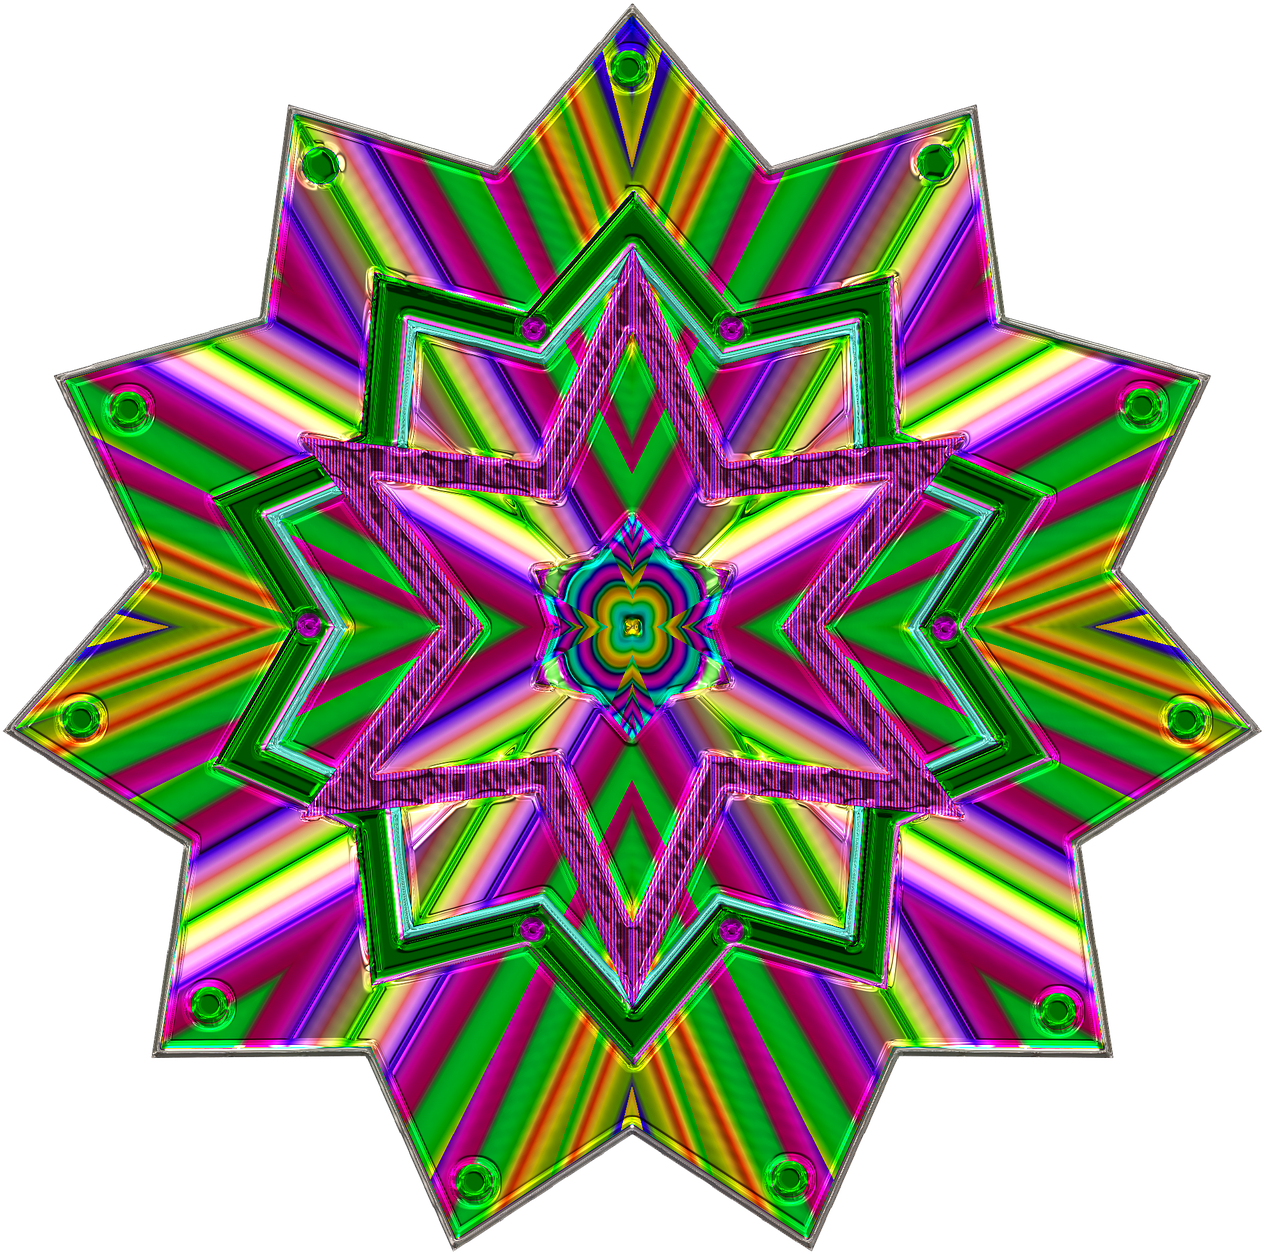 Vibrant Kaleidoscopic Crystal Star PNG image